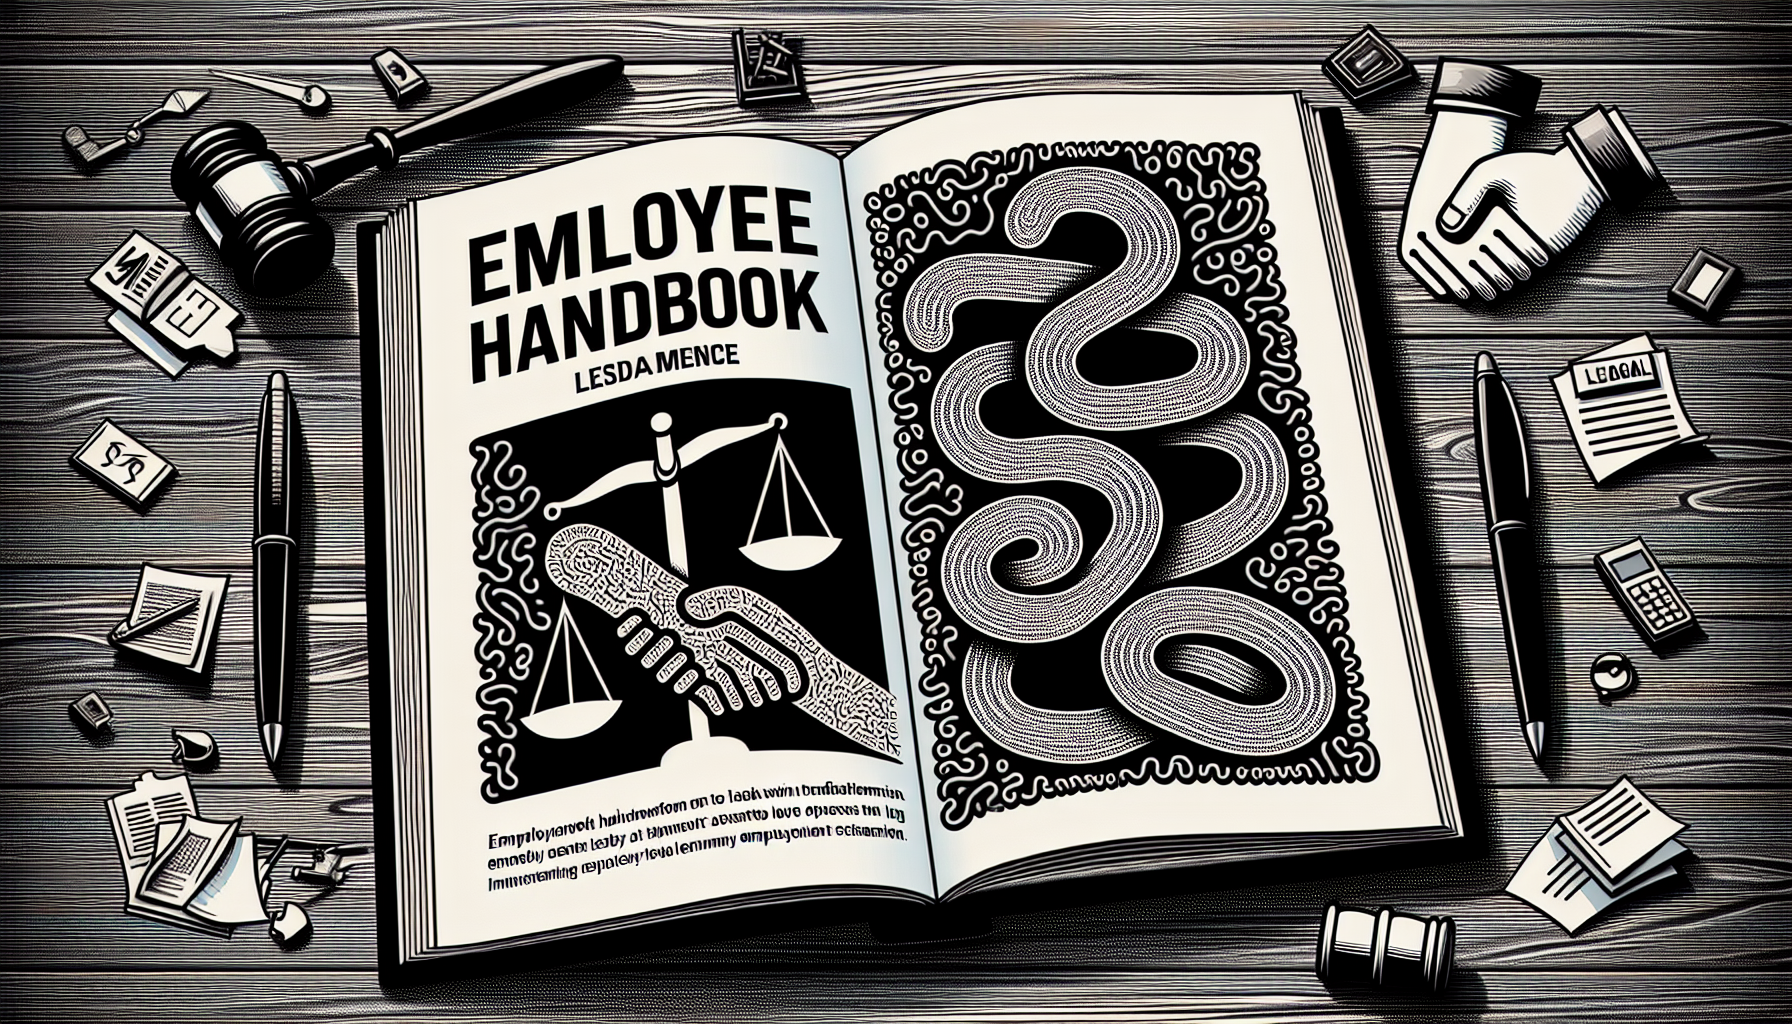 Legal disclaimer in an employee handbook